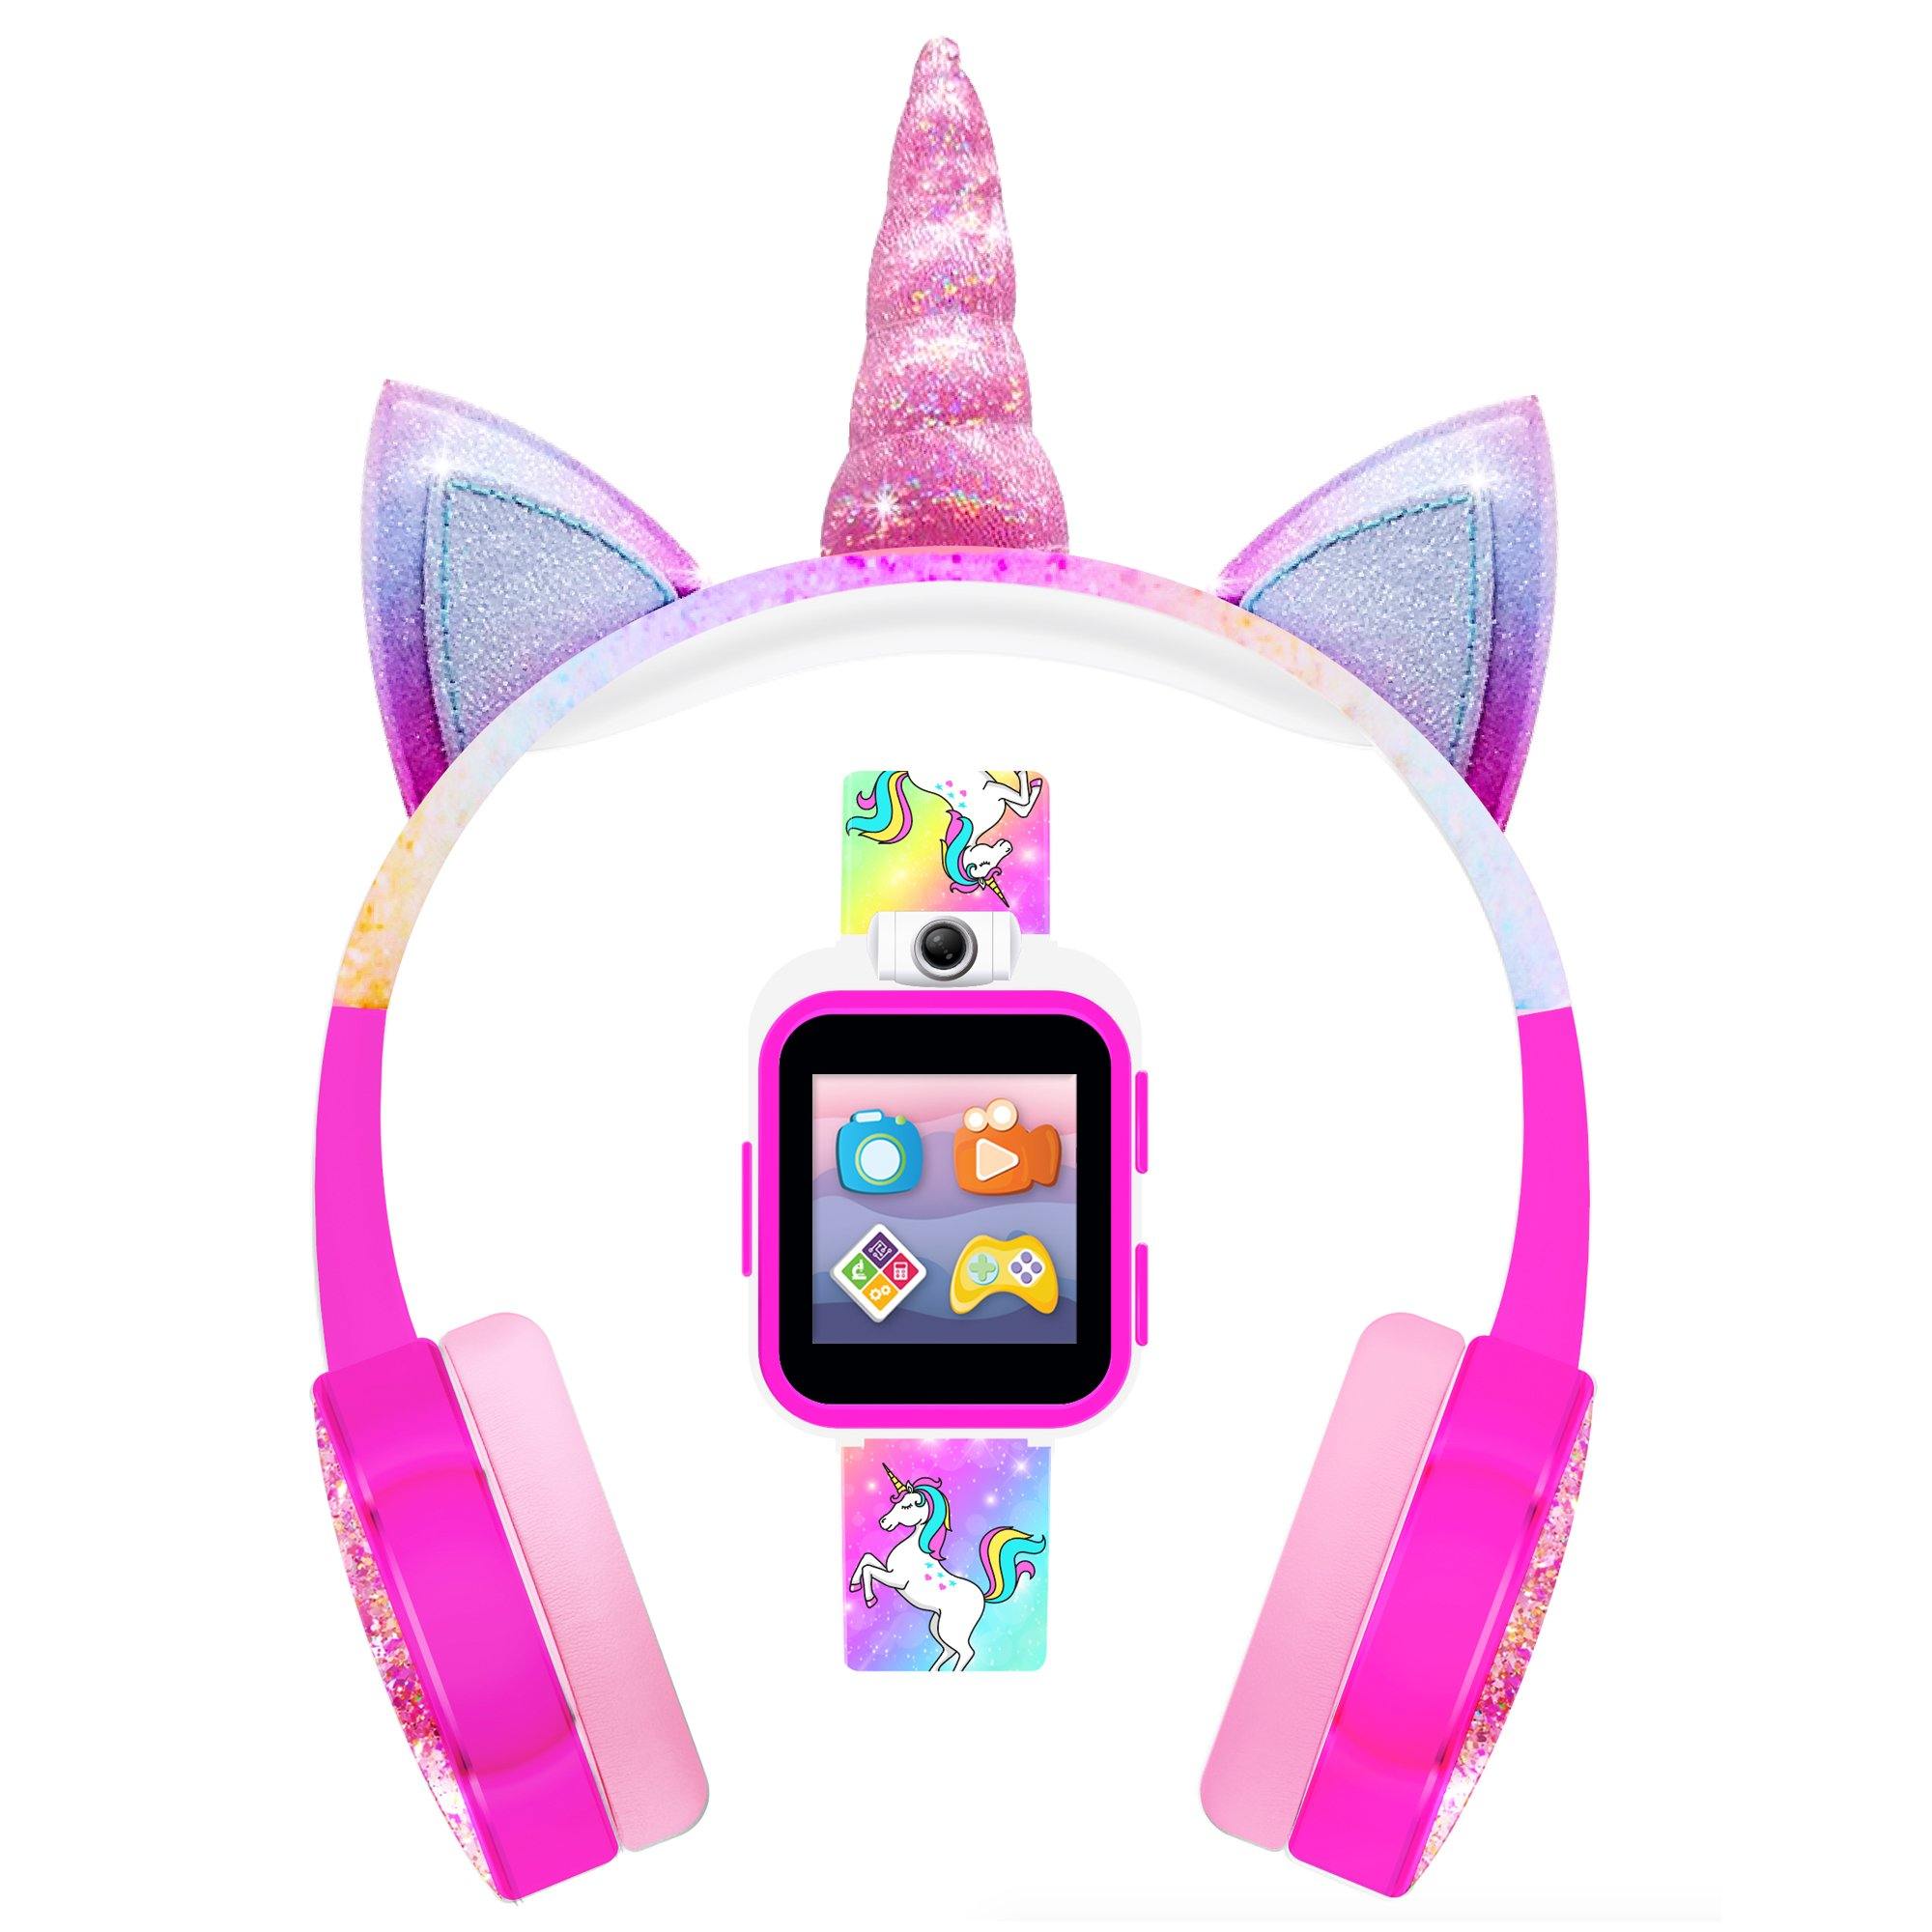 PlayZoom 2 Kids Smartwatch with Headphones: Rainbow Unicorn affordable smart watch with headphones